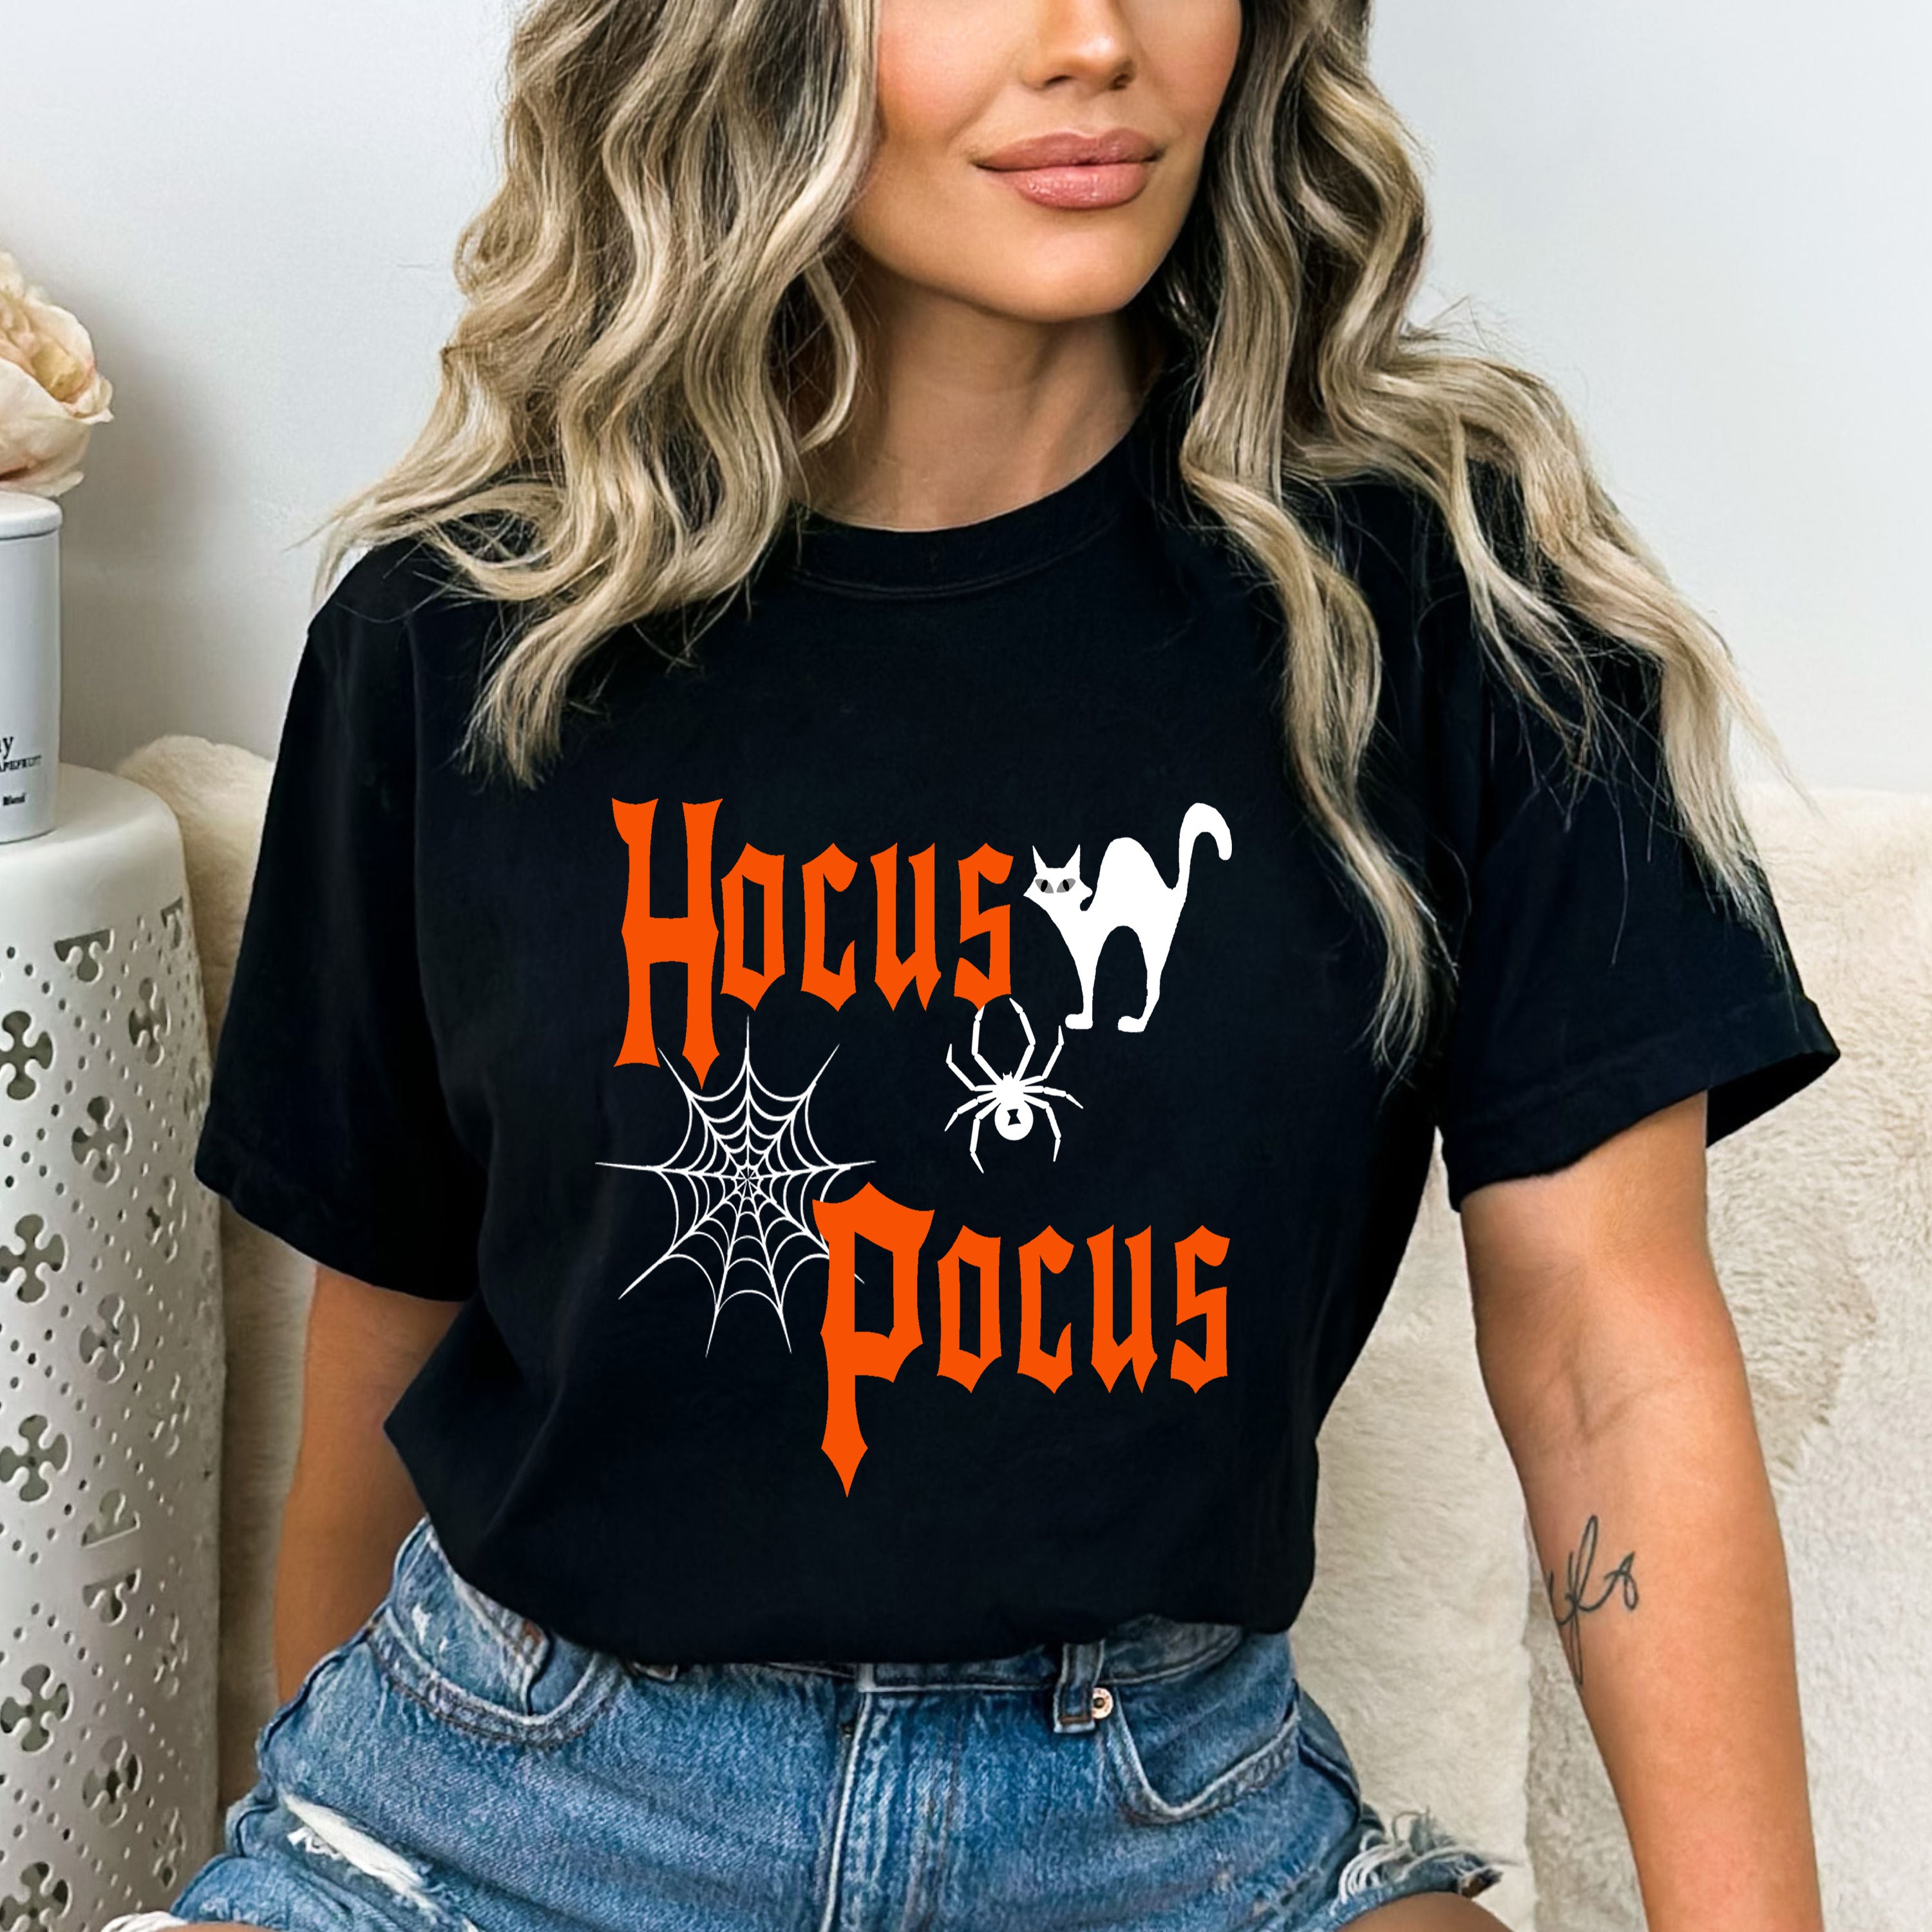 "HOCUS POCUS" BLACK AND GREY T-SHIRT.